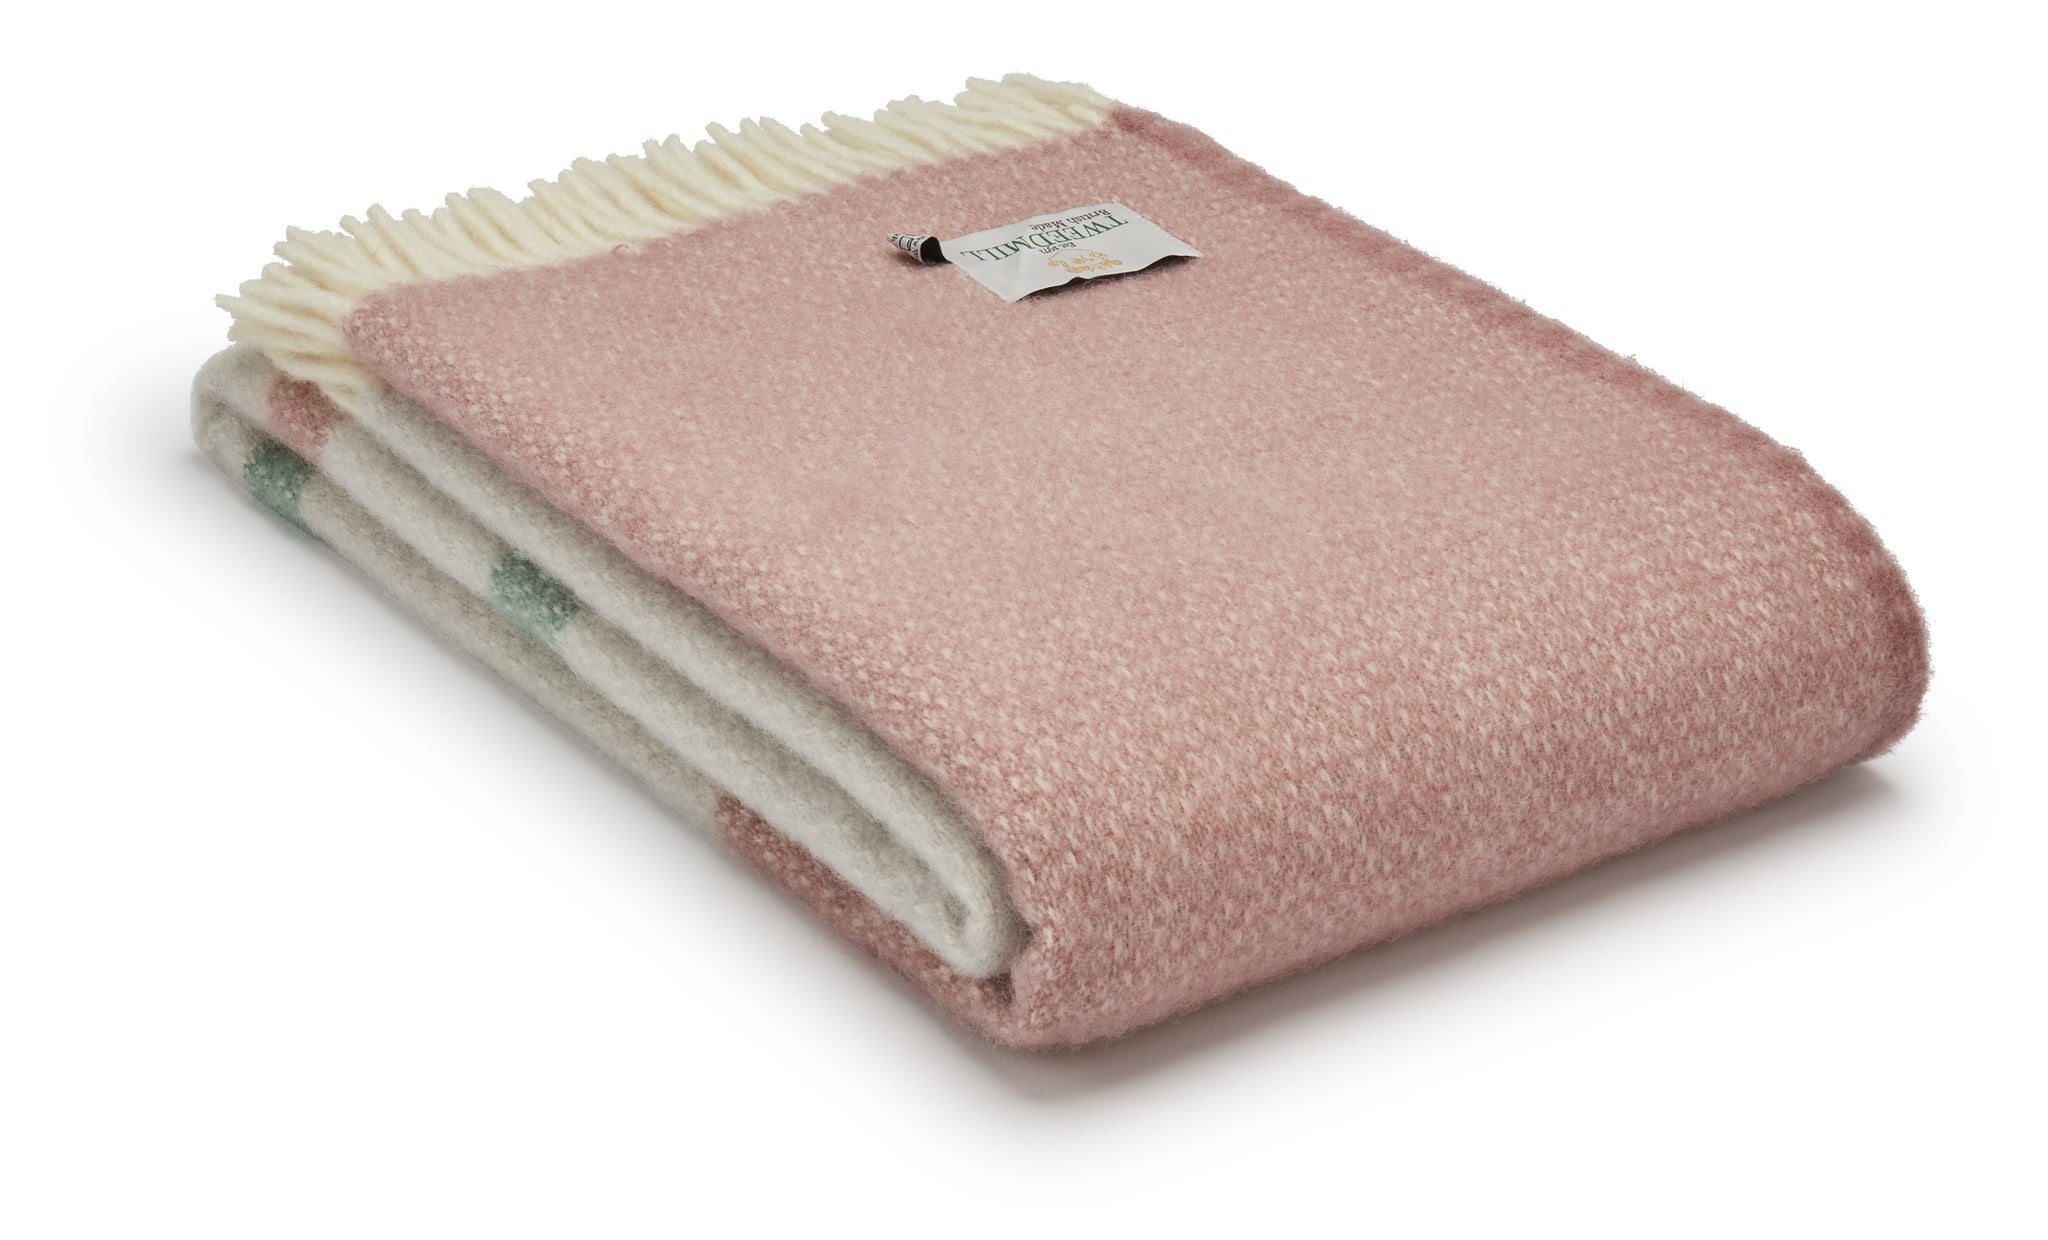 Brand new Tweedmill Brecon dusky pink wool throw blanket